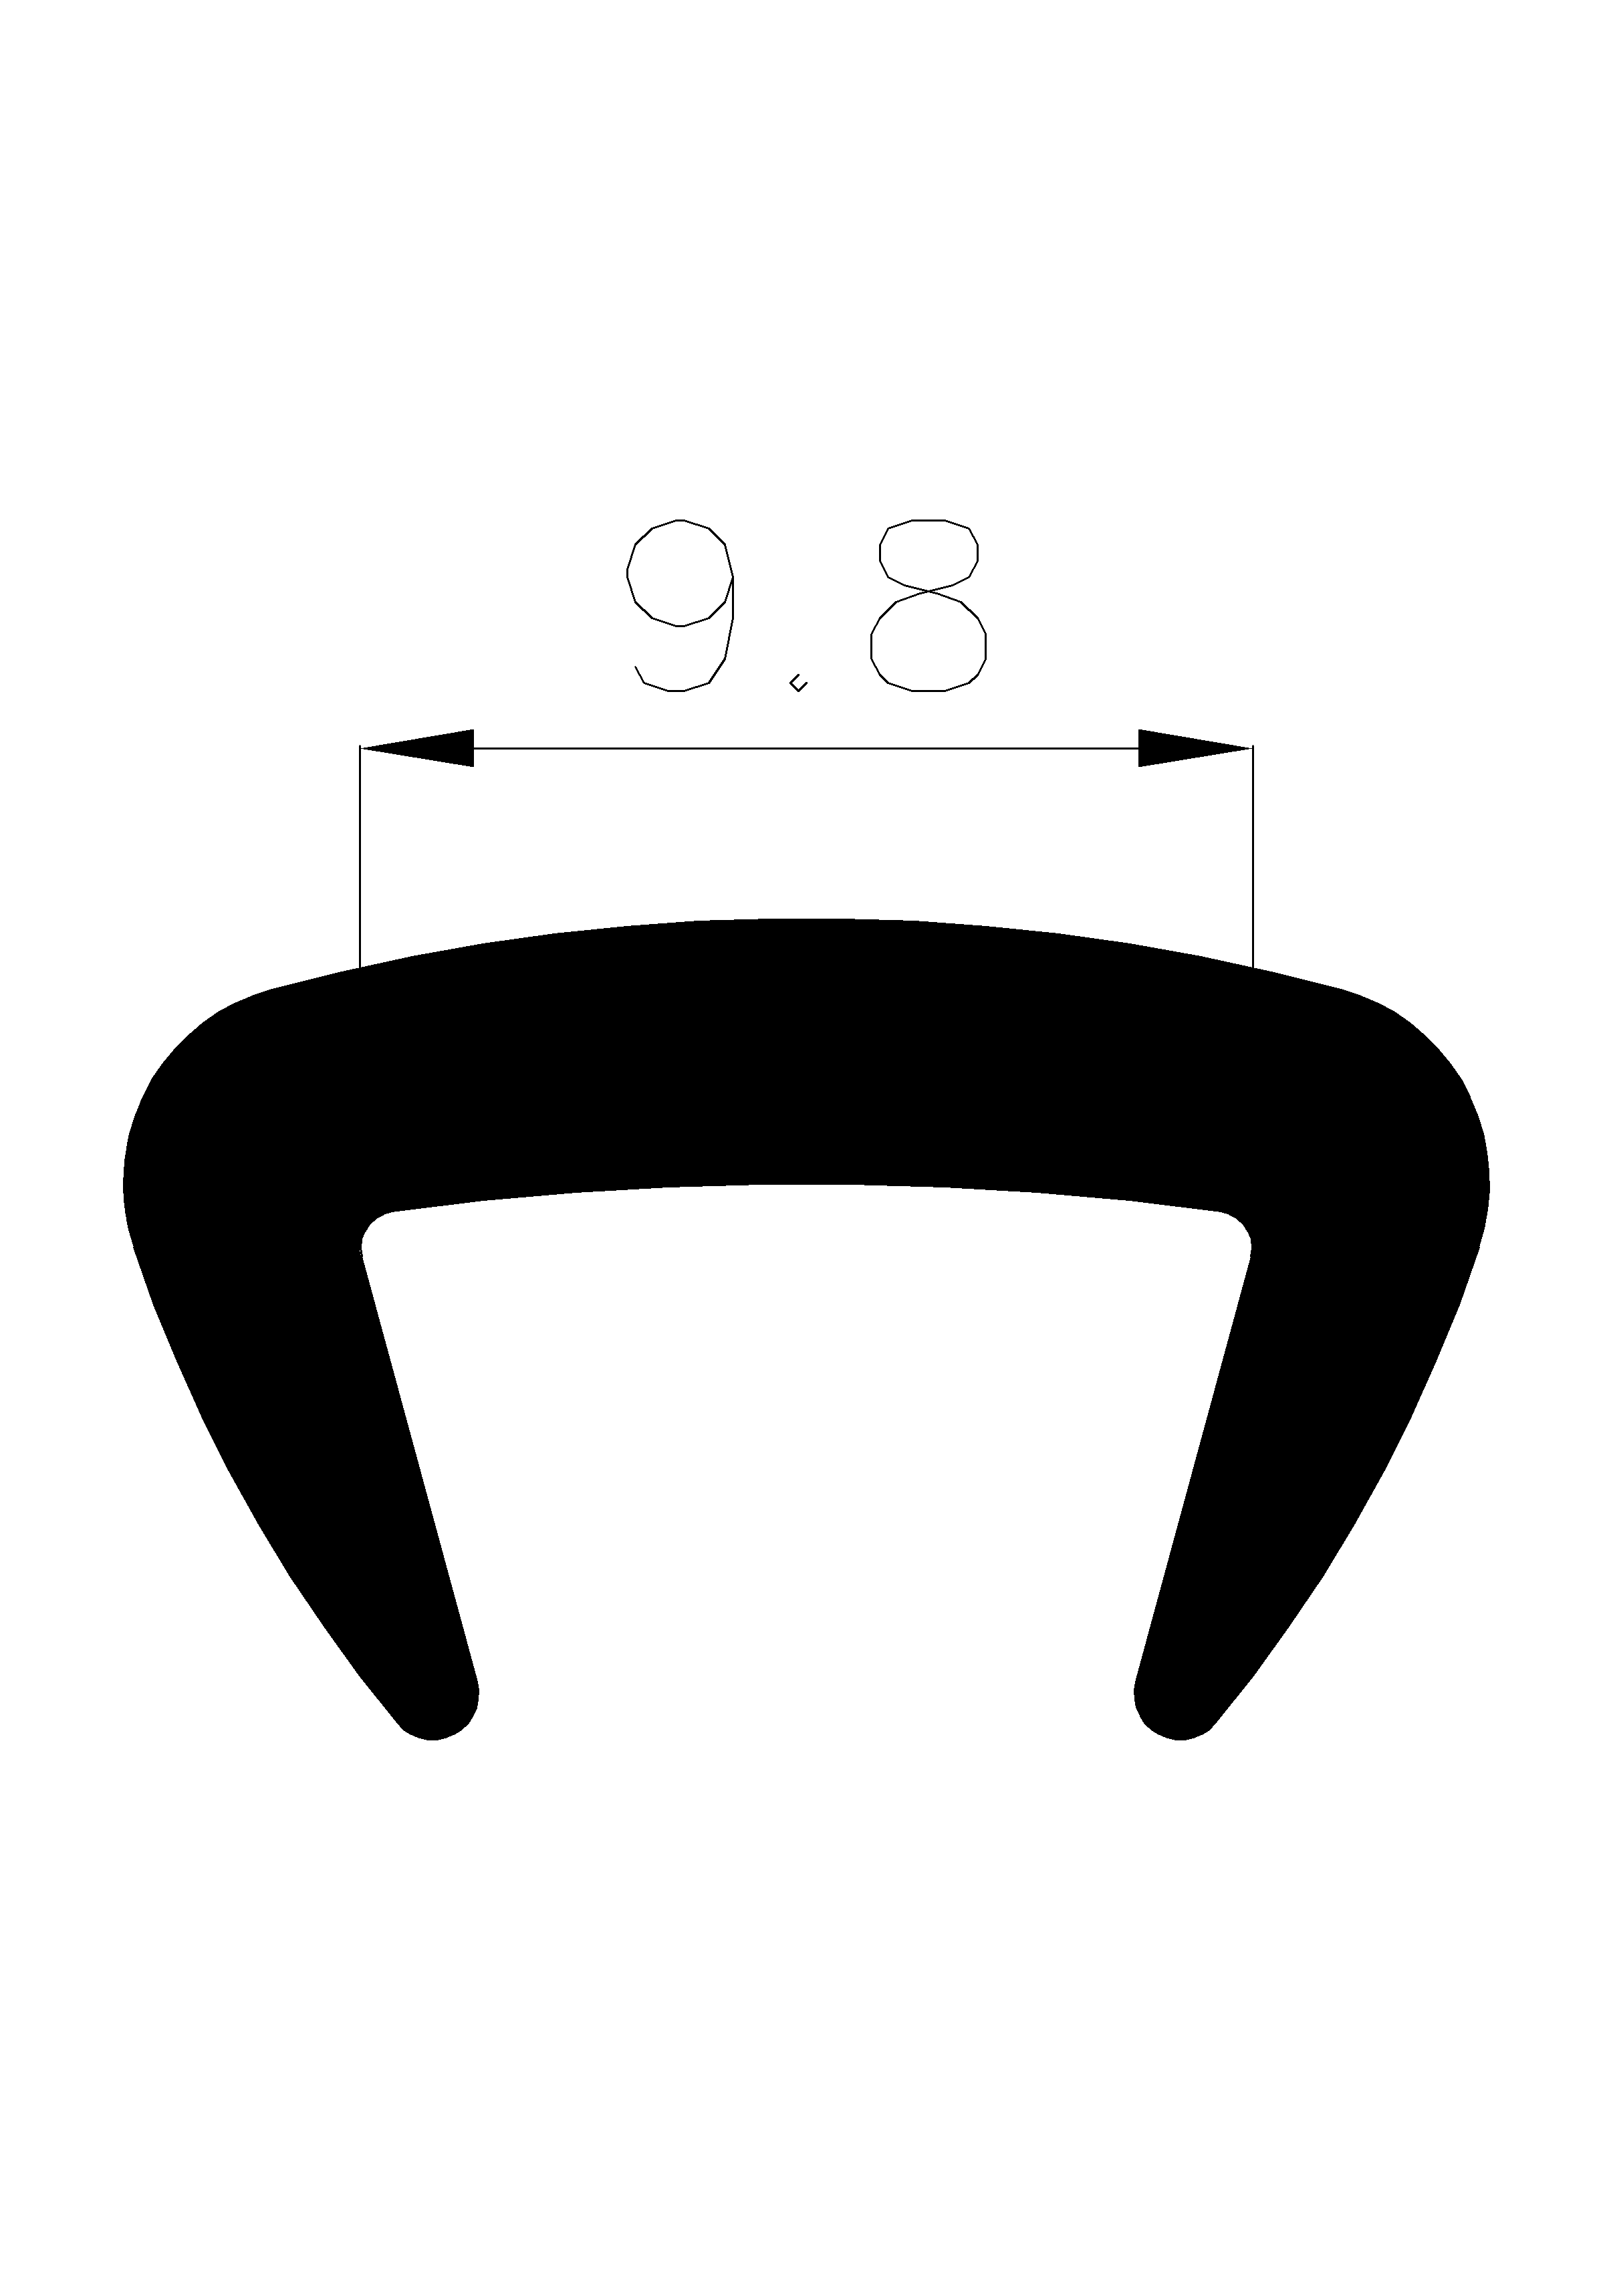 10930160KG - rubber profiles - U shape profiles